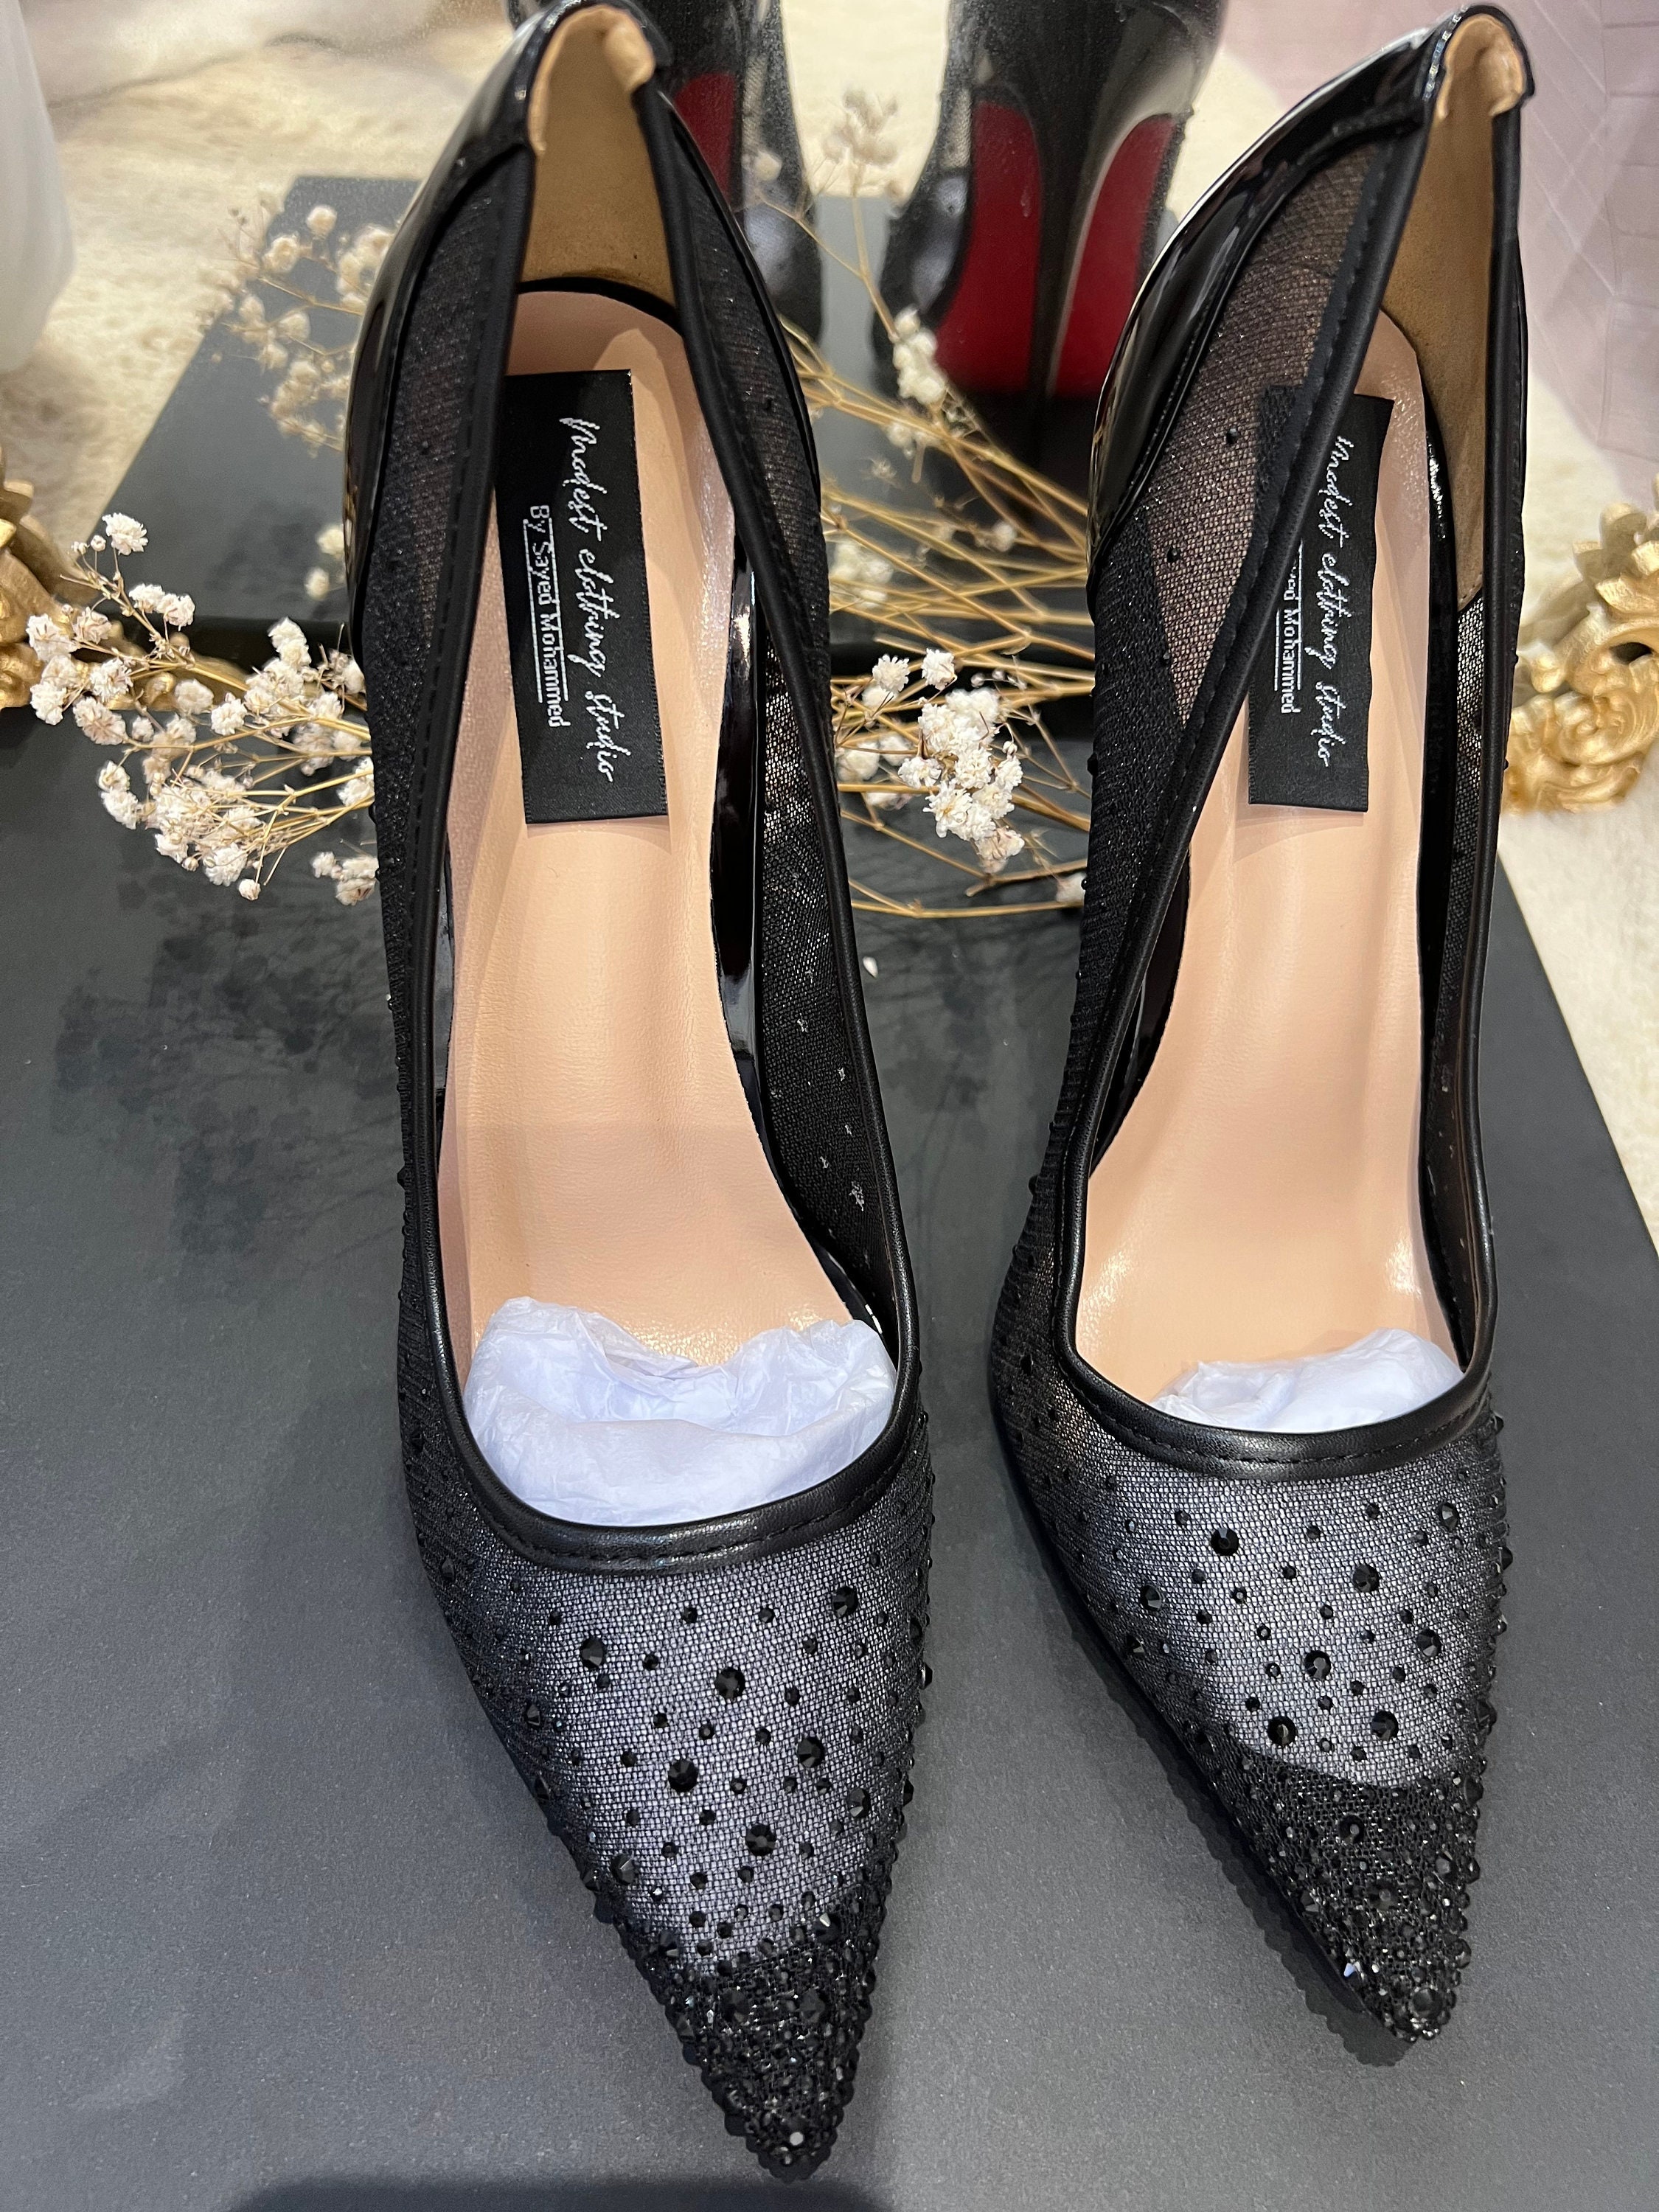 Rhinestone Women Pumps Shoes Closed Toe Heels Black Gray 